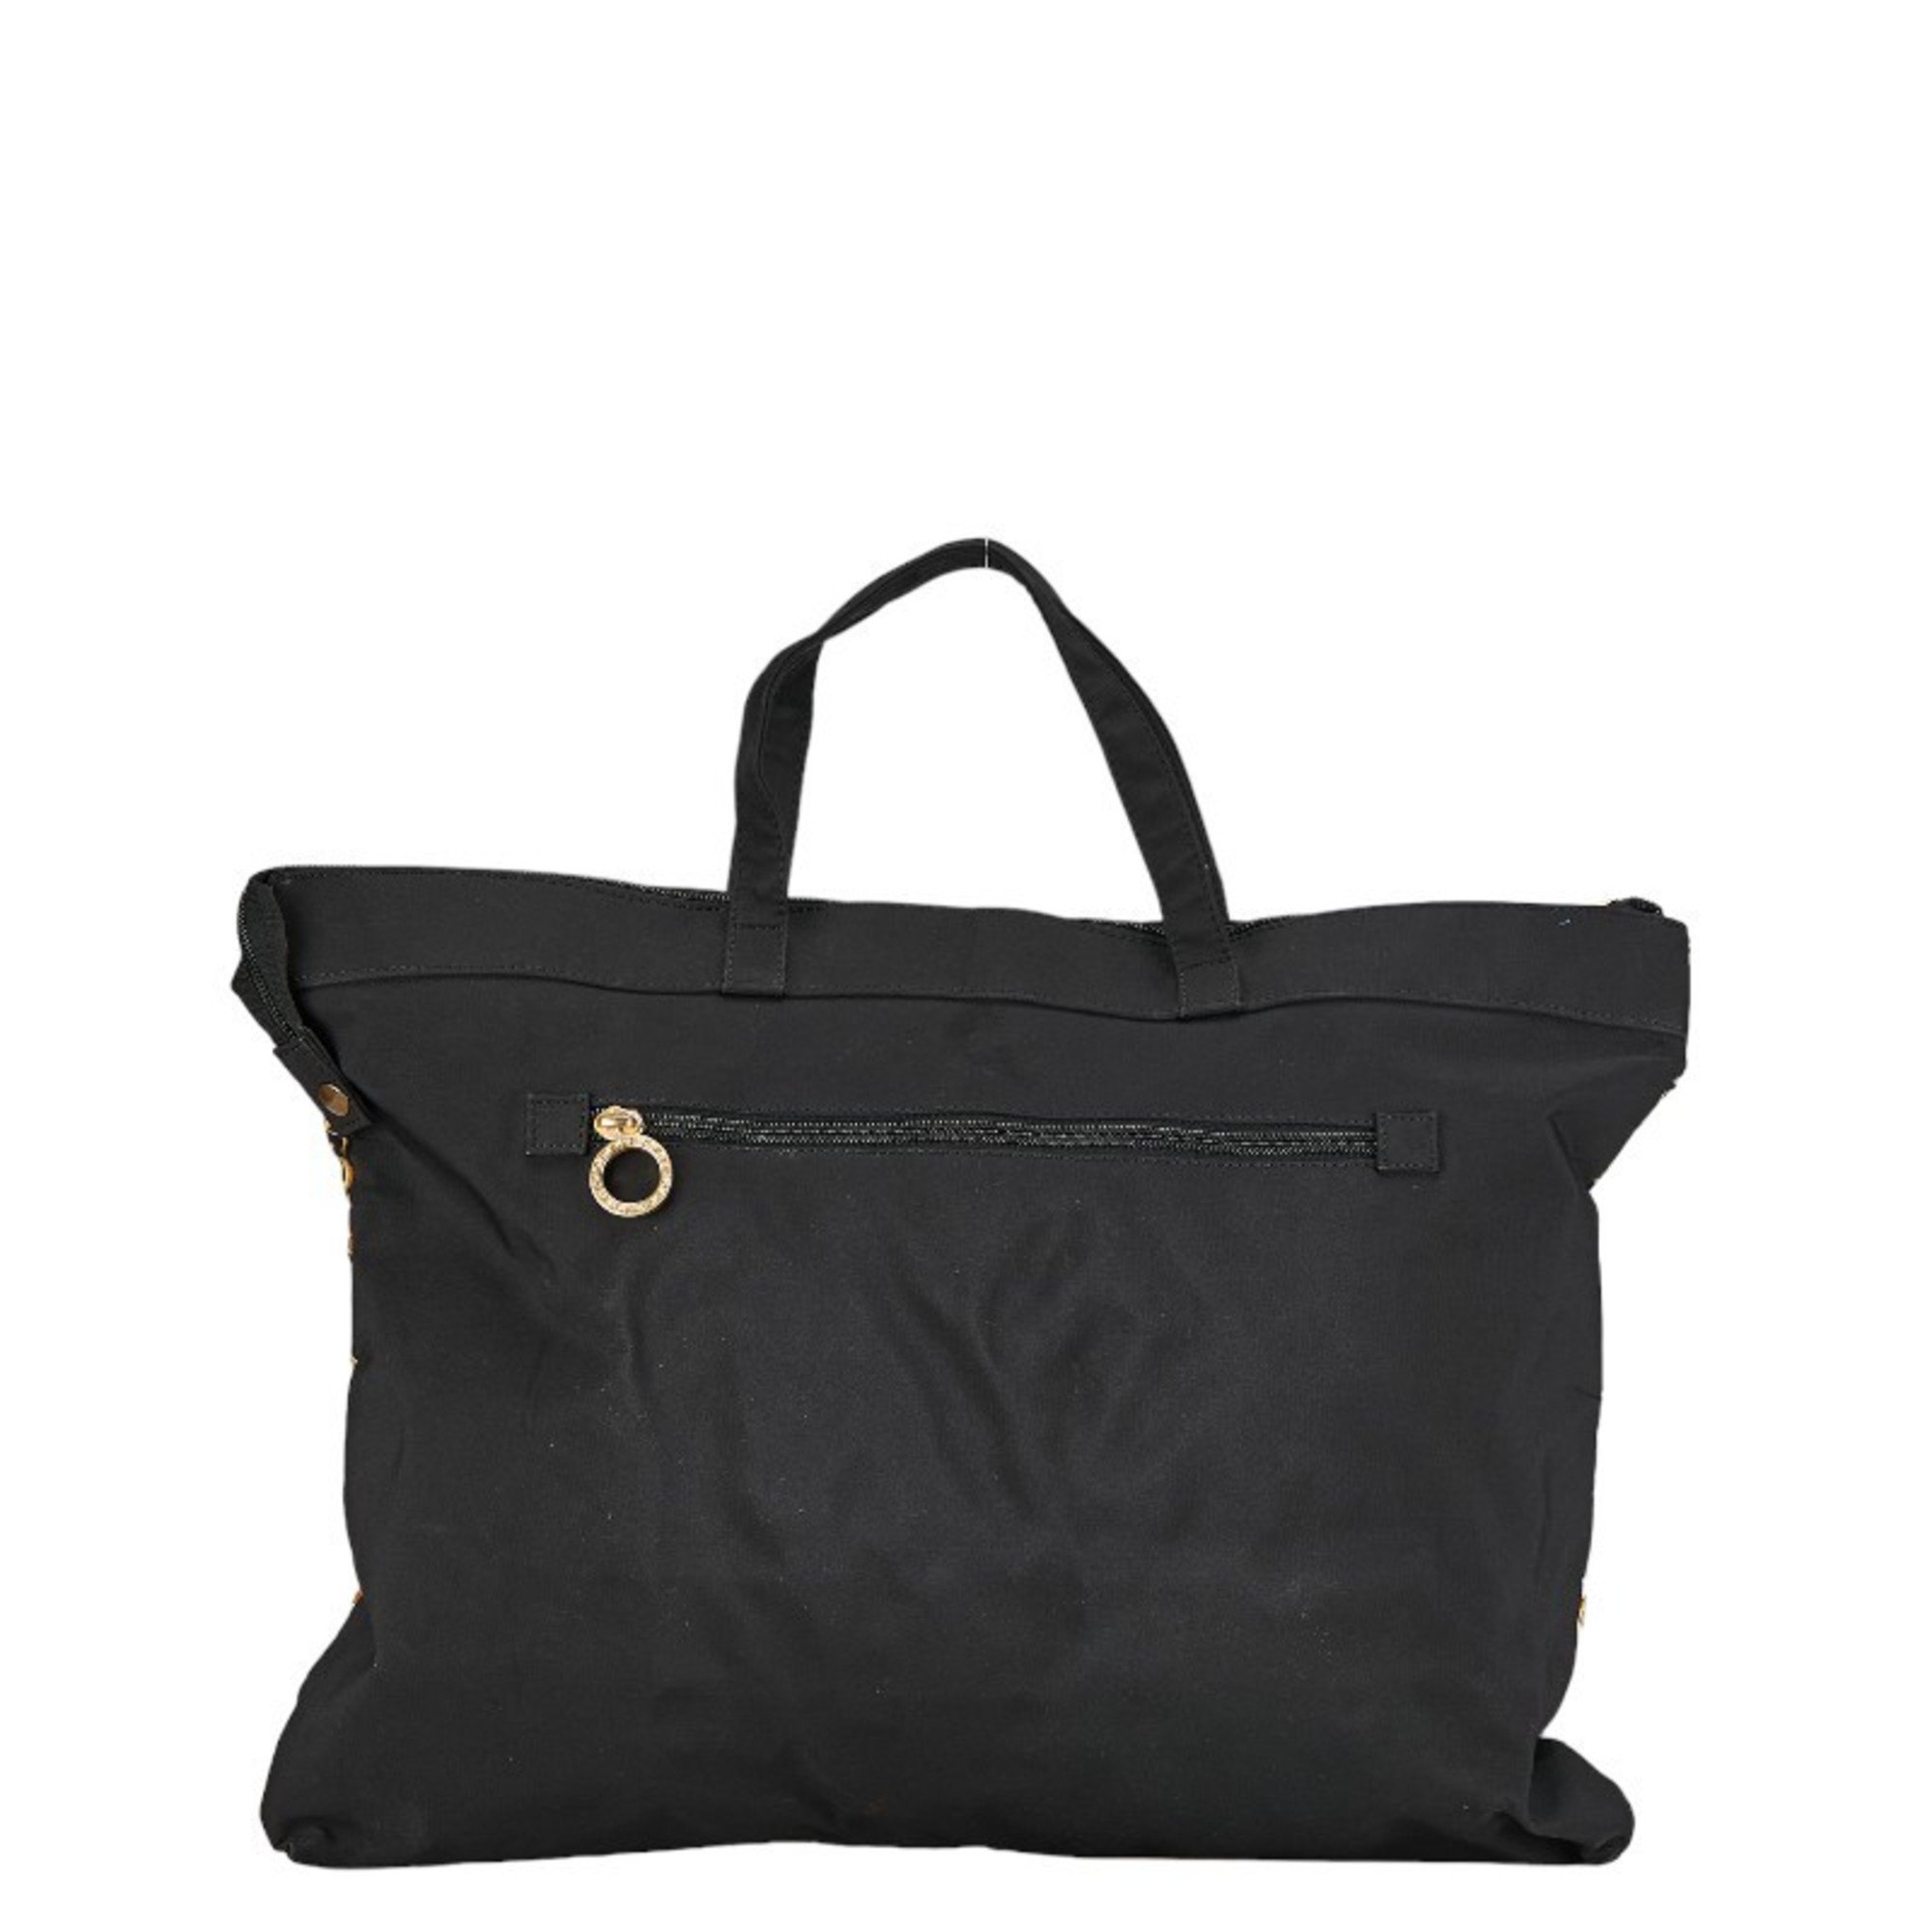 Versace Medusa Handbag Tote Bag Black Yellow Nylon Women's VERSACE